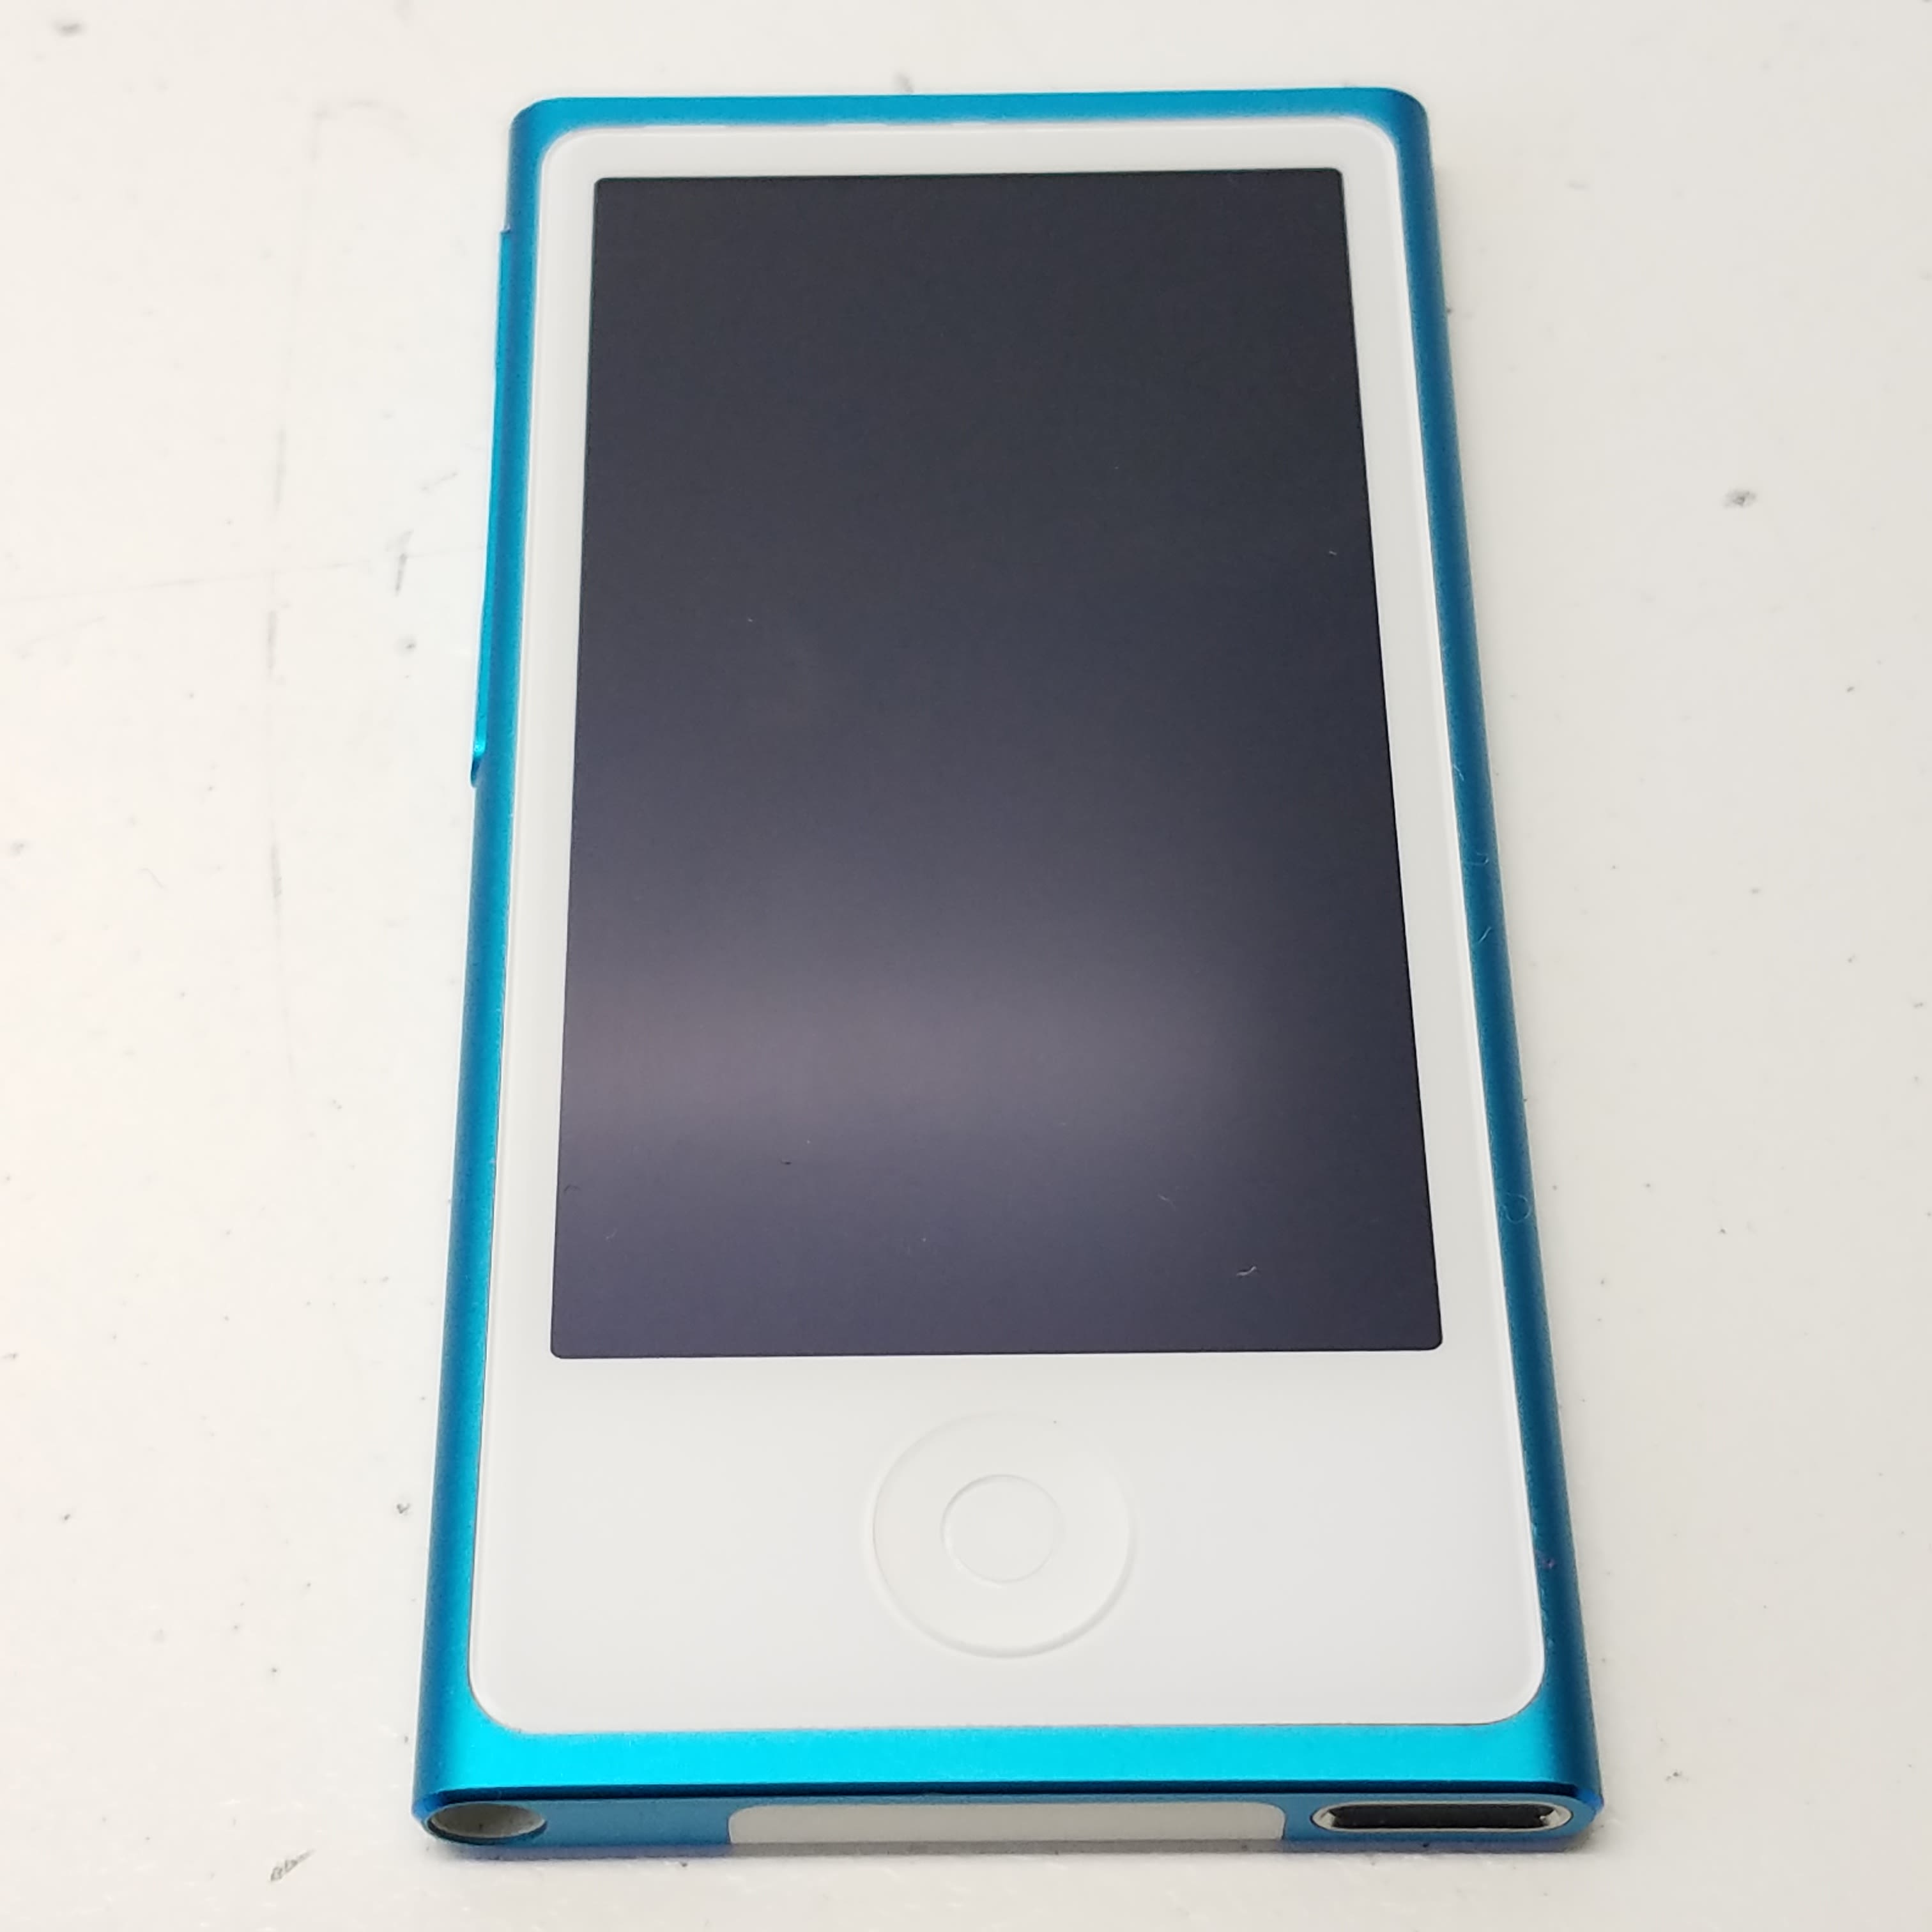 Buy the Apple iPod Nano (7th generation) - Blue (A1446